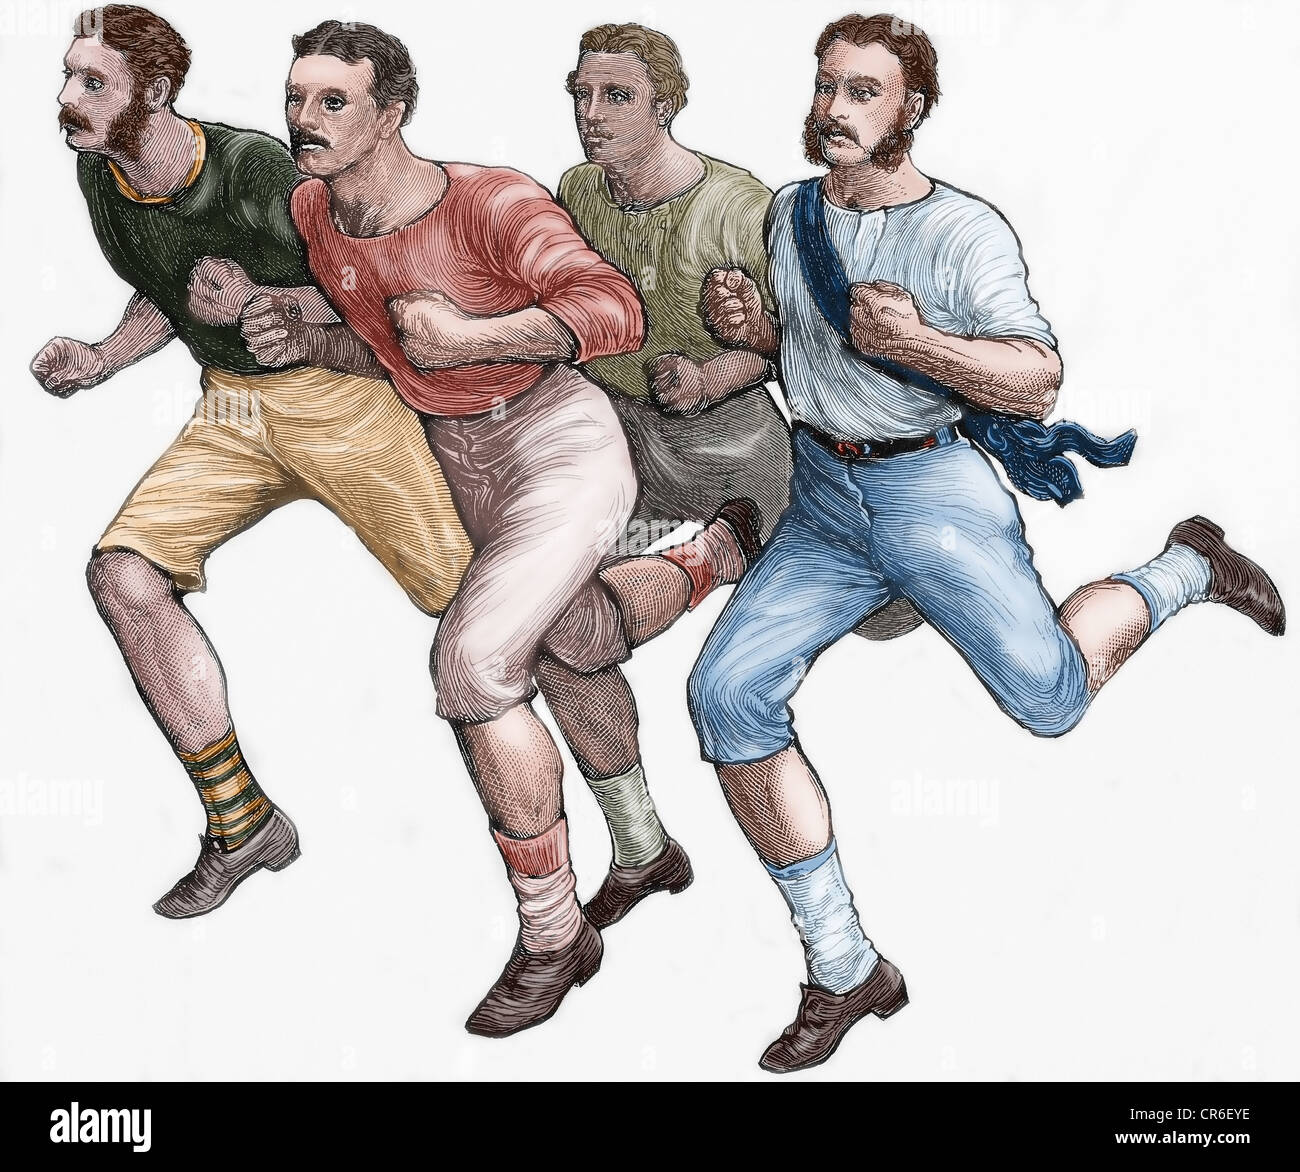 Athletics. Race. Early twentieth century. Colored engraving. Stock Photo